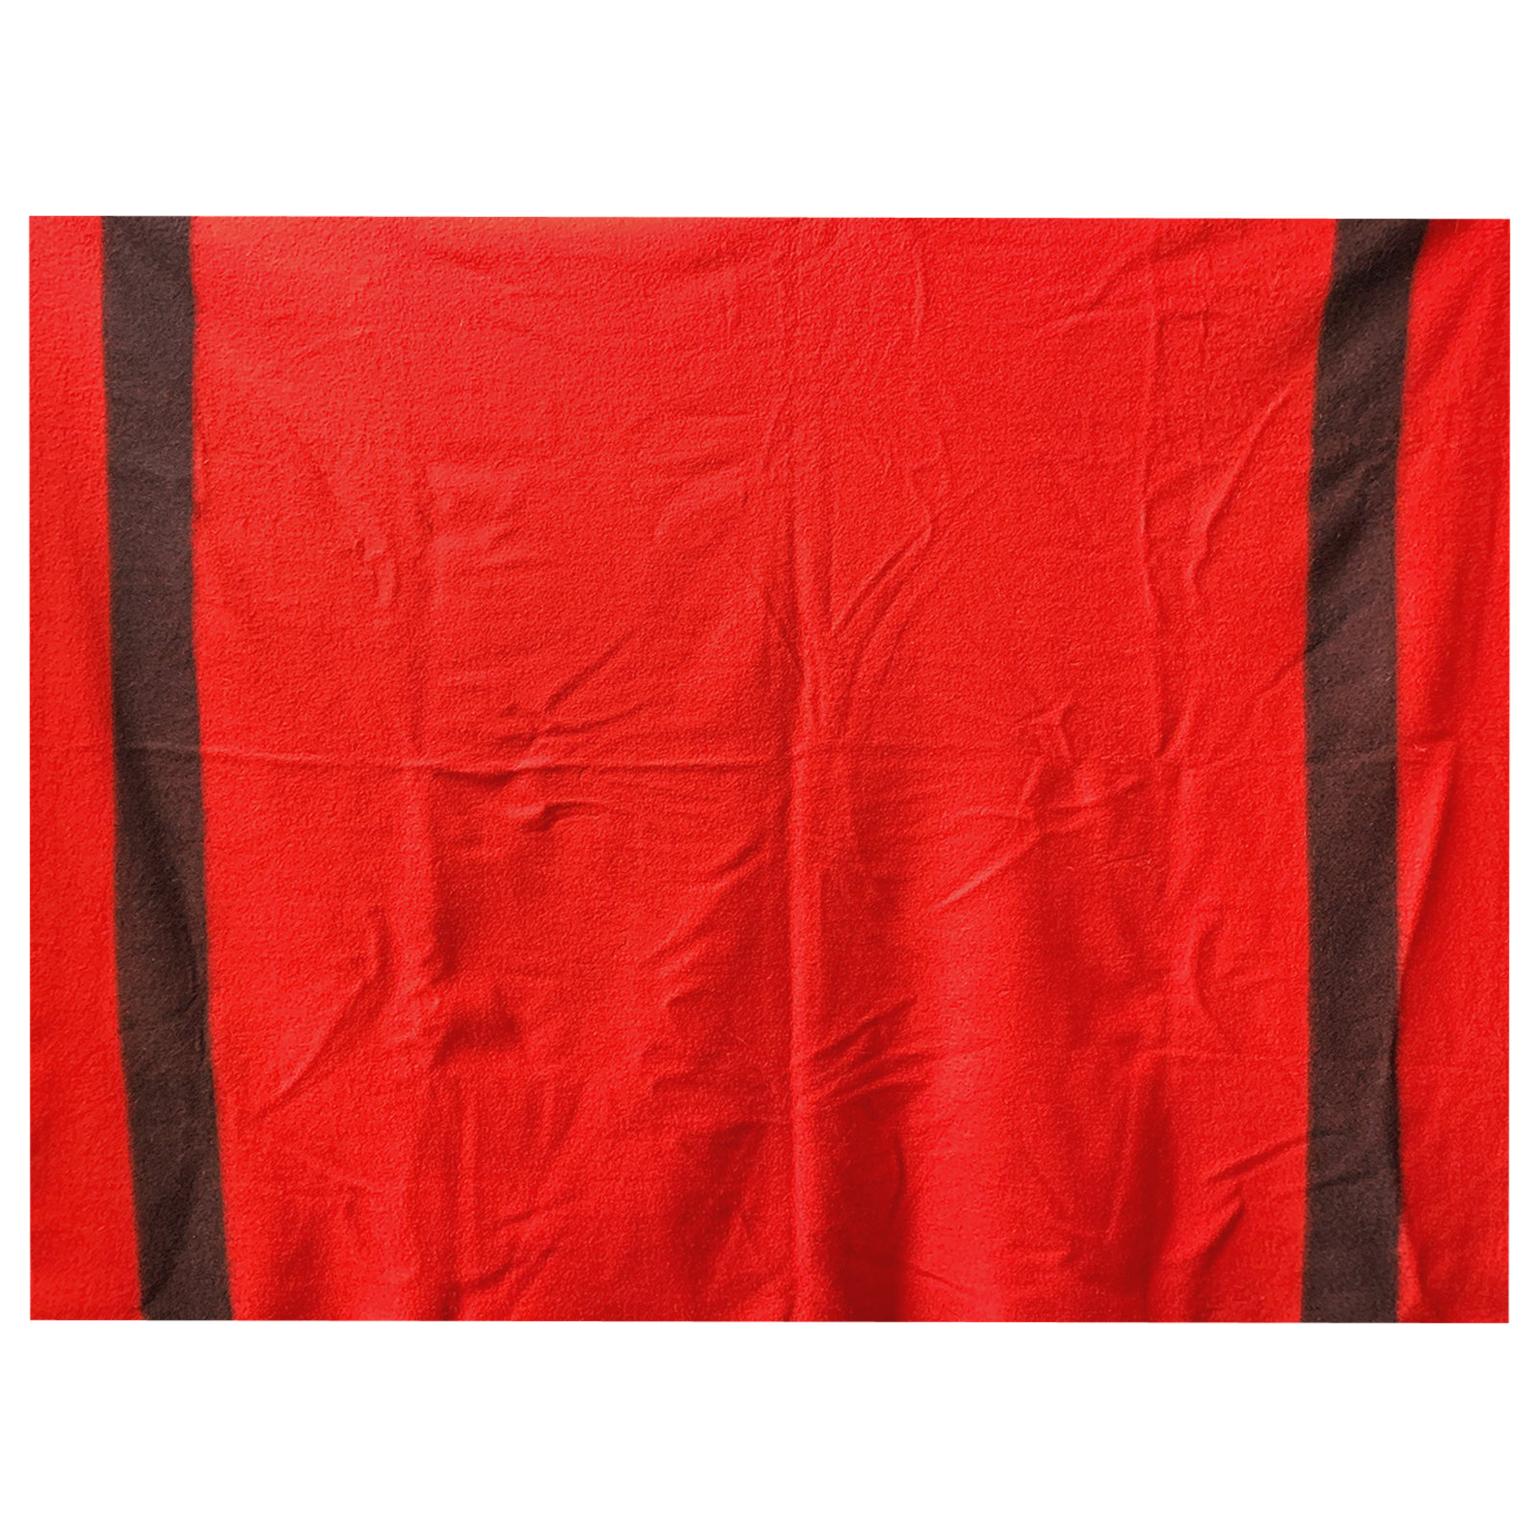 Vintage Red Hudson's Bay Company Point Blanket